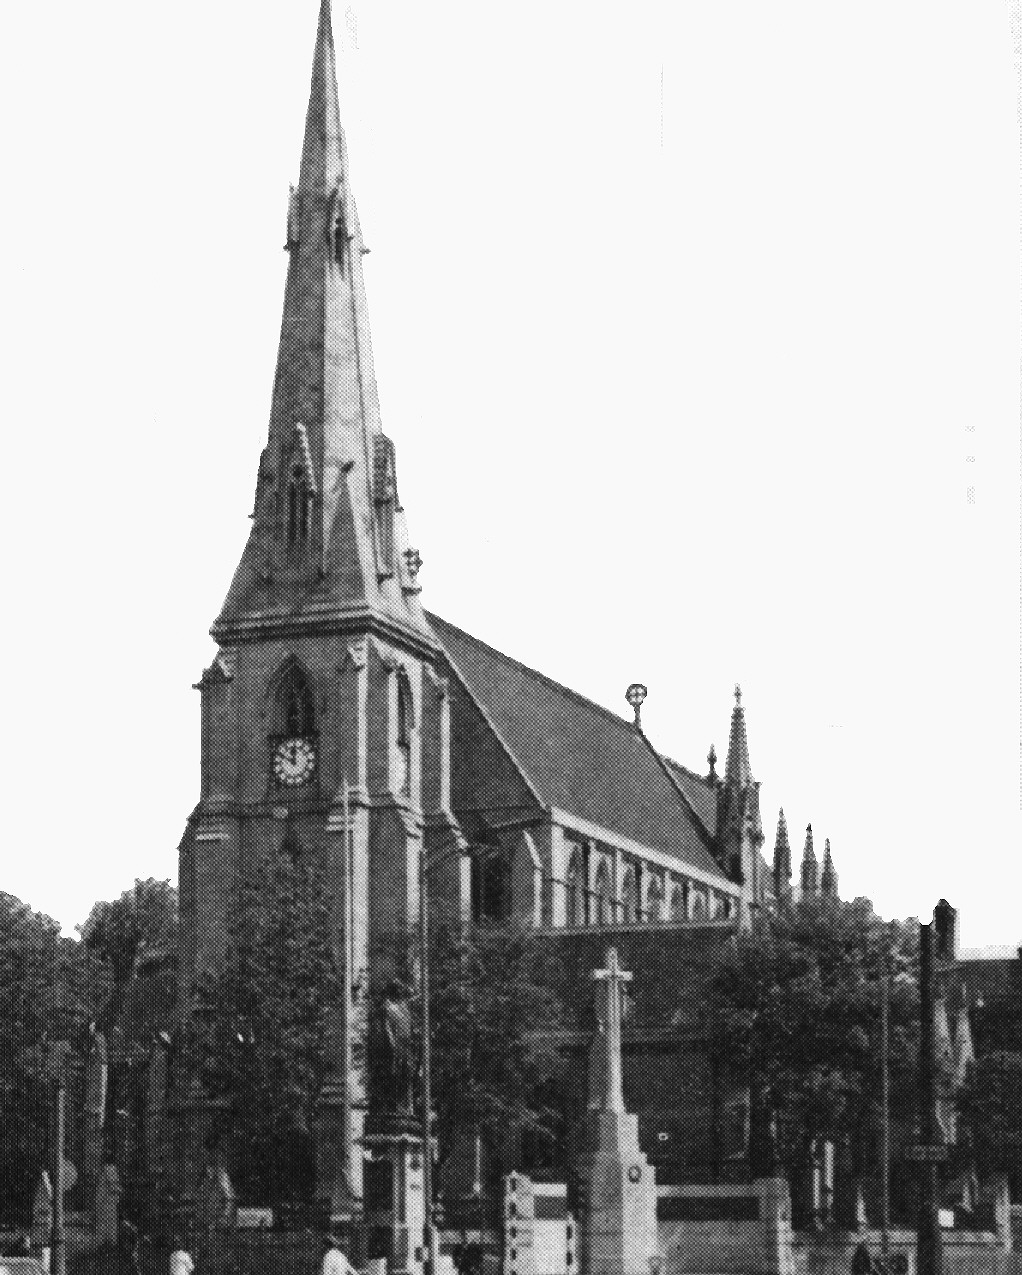 The Parish Church of St Mary the Virgin, Bury